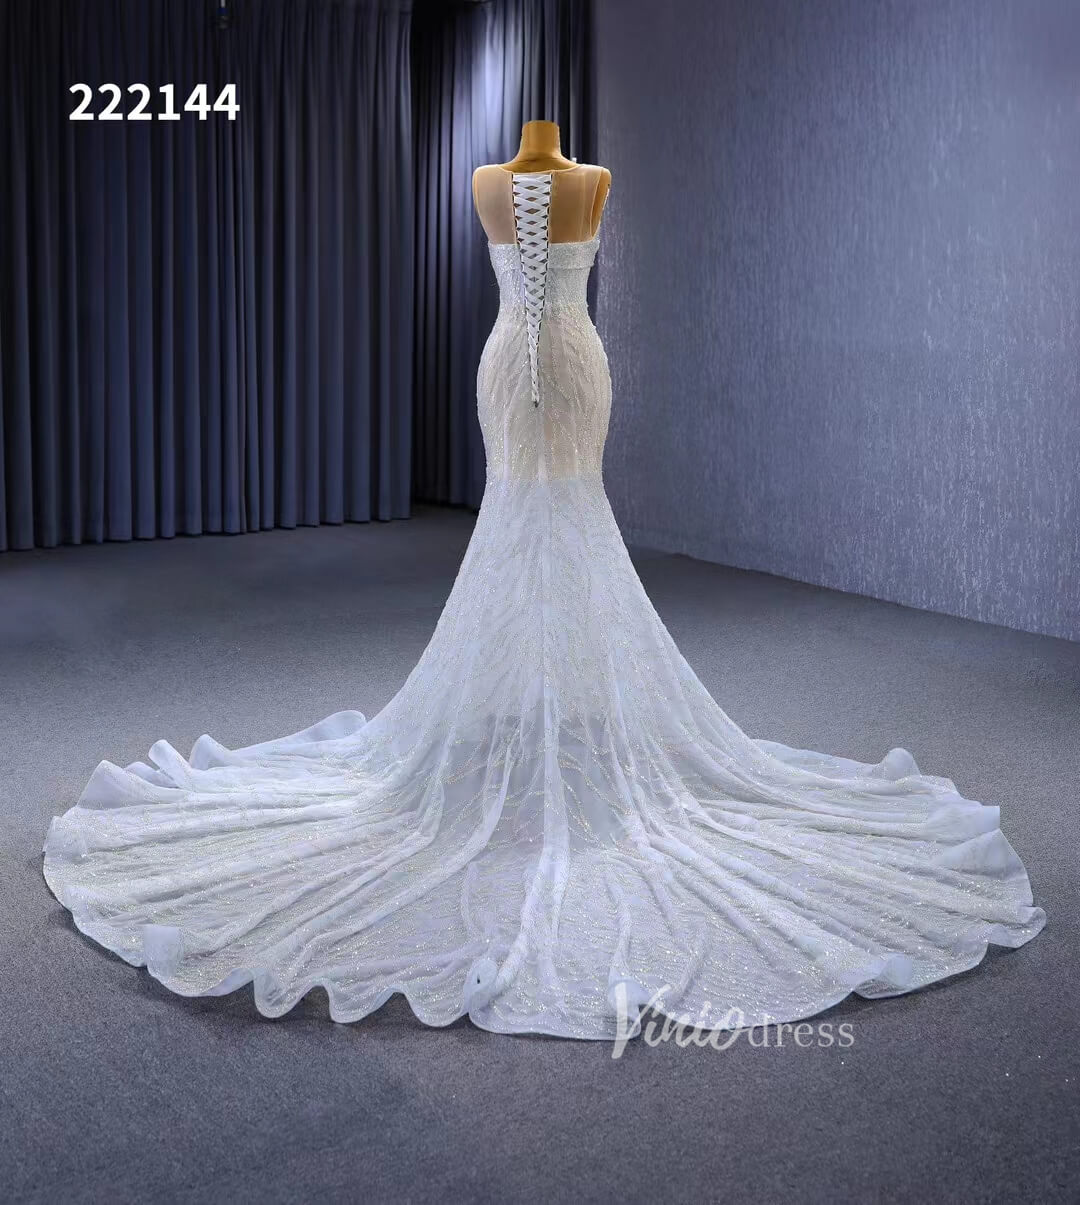 White Mermaid Wedding Dress Beaded Sheer Bridal Gown 222144-wedding dresses-Viniodress-Viniodress